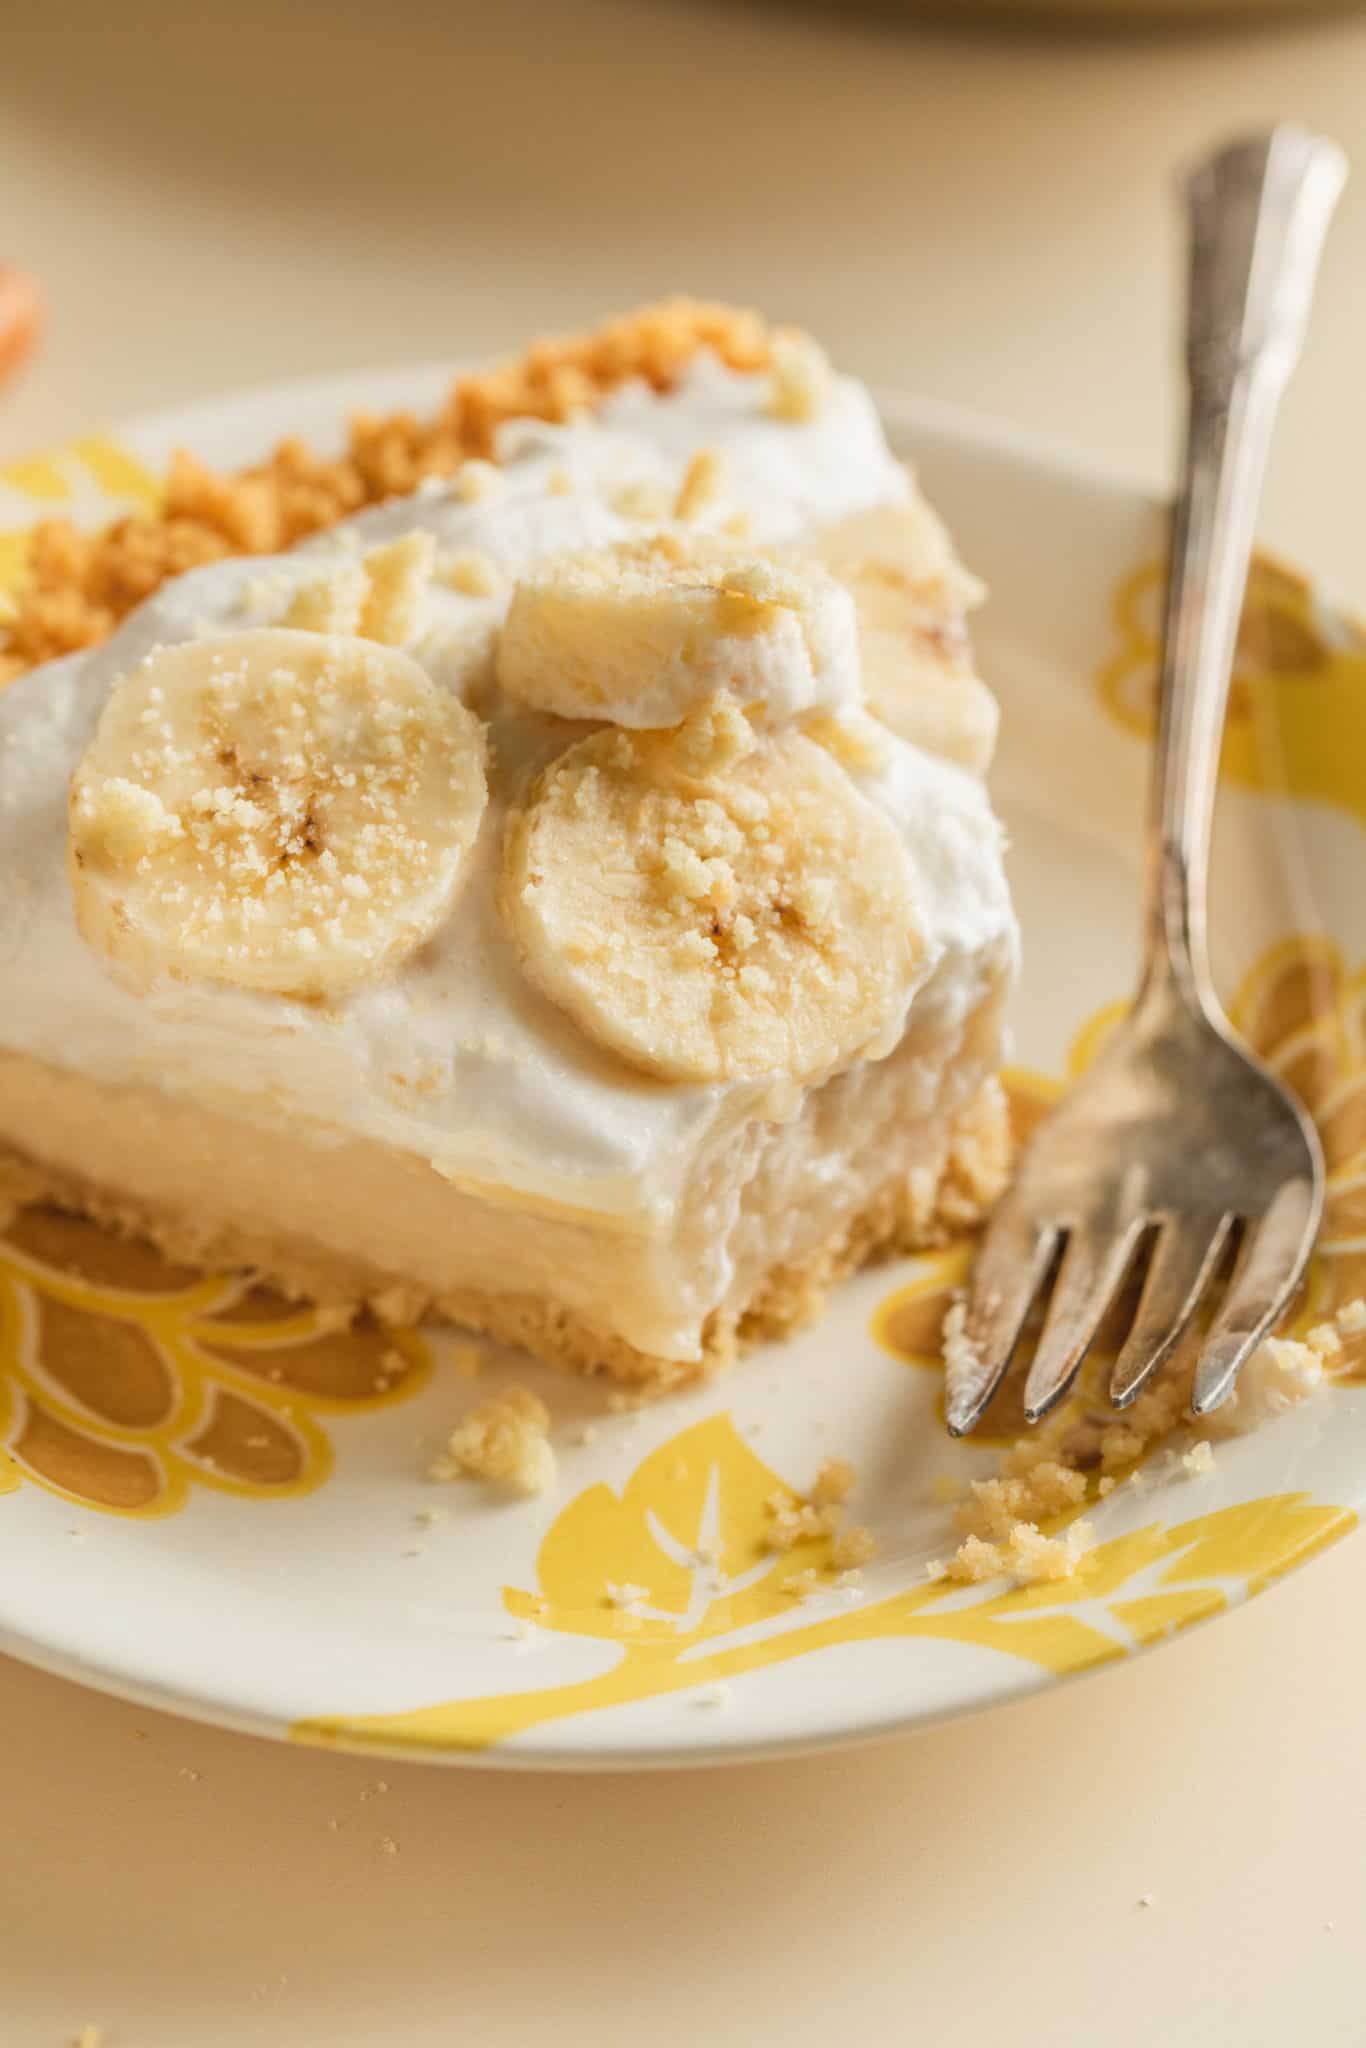 A big slice of vegan banana cream pie recipe made gluten free.